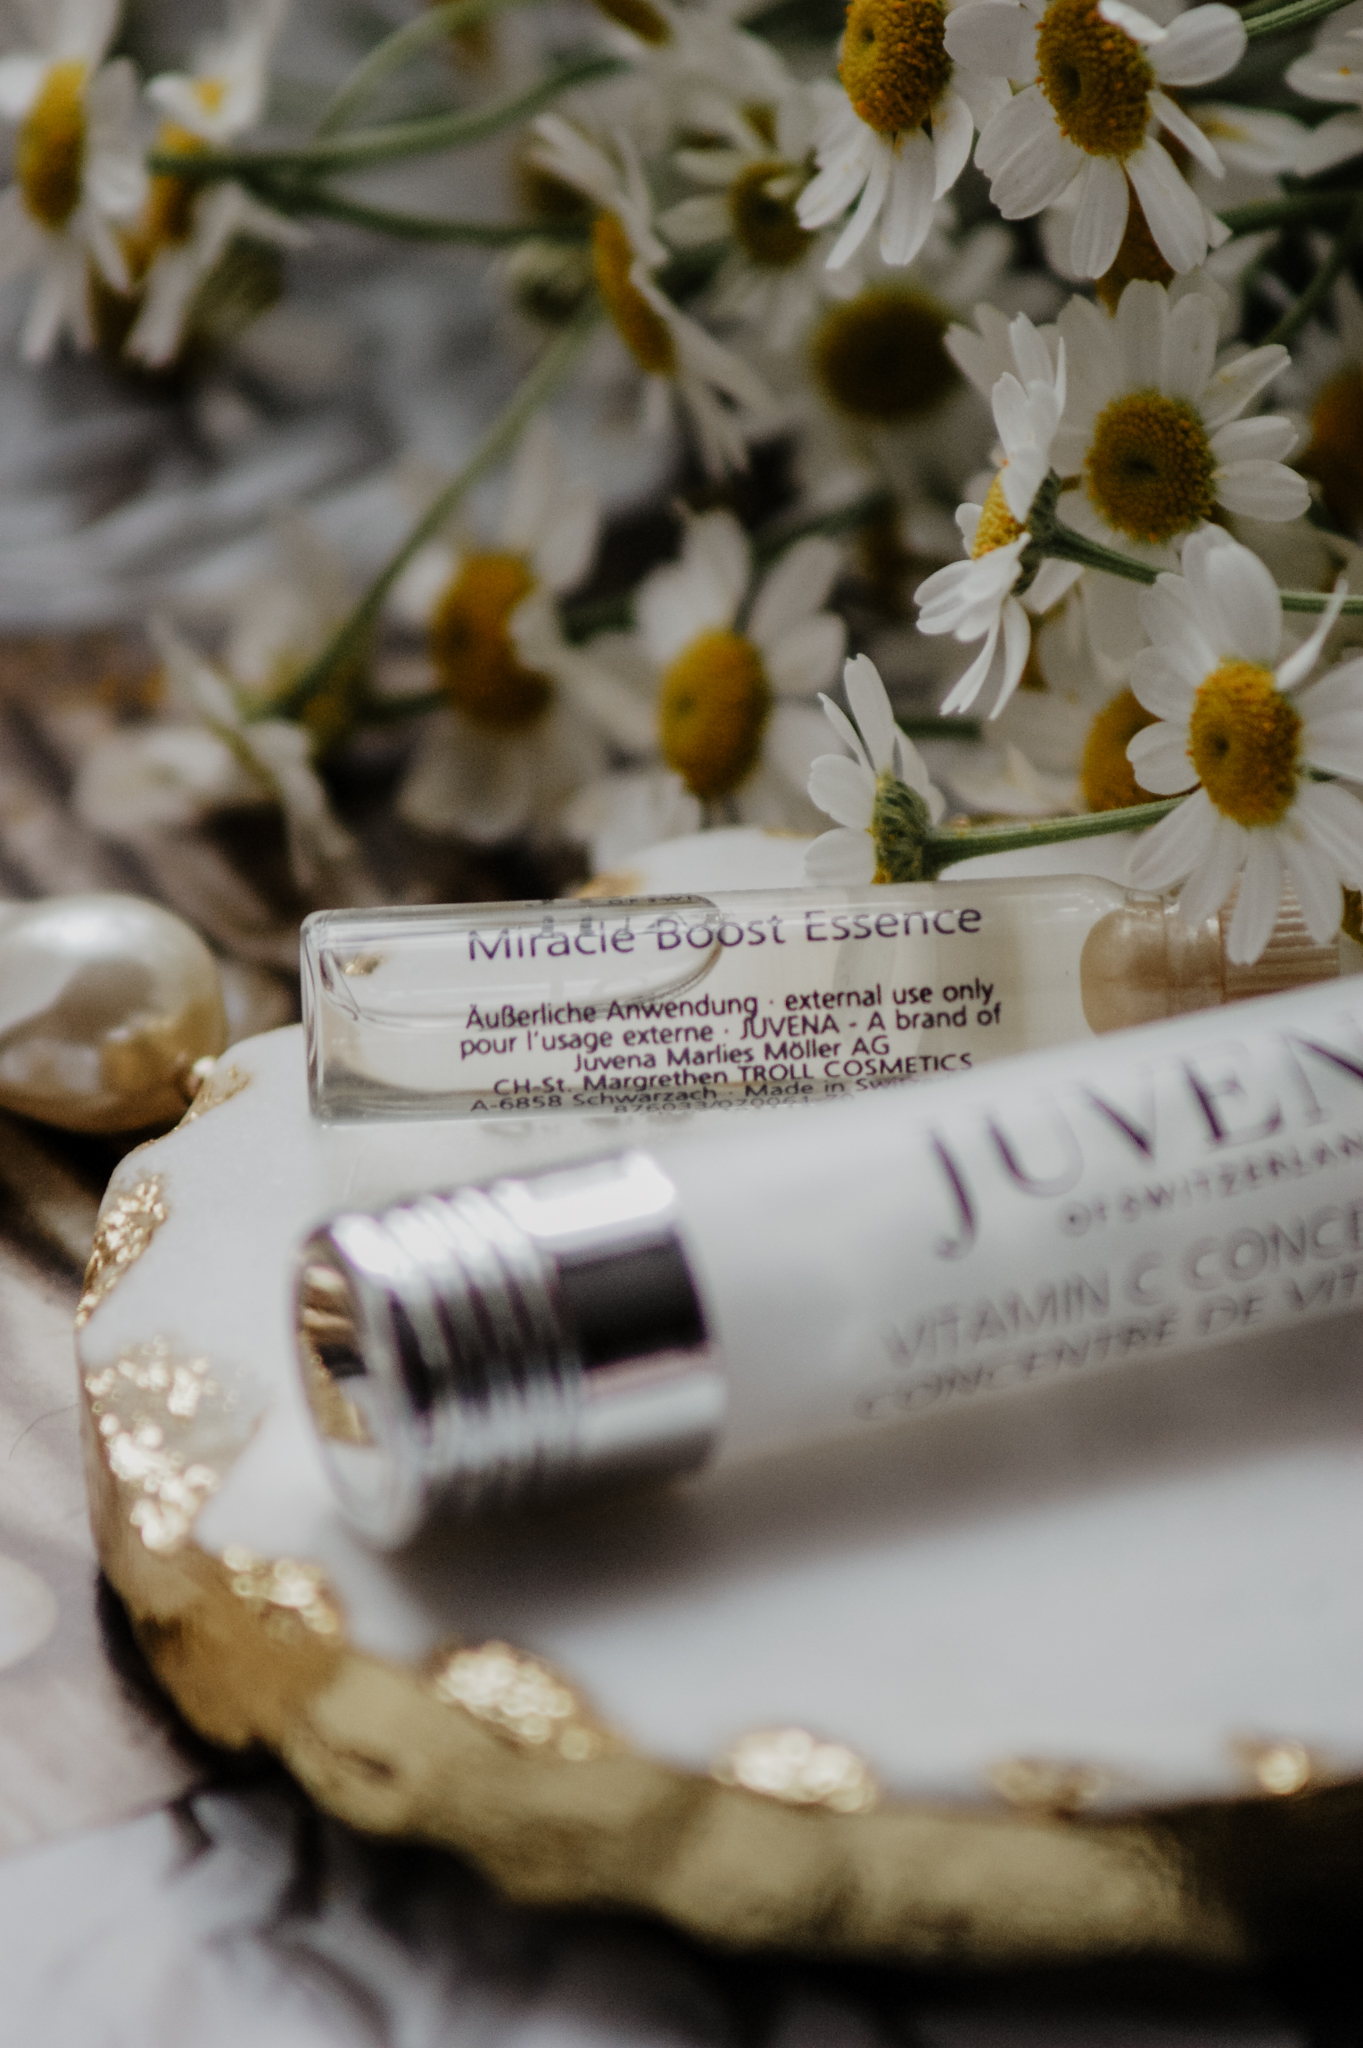 Juvena Skin Specialists Set: Vitamin C Concentrate